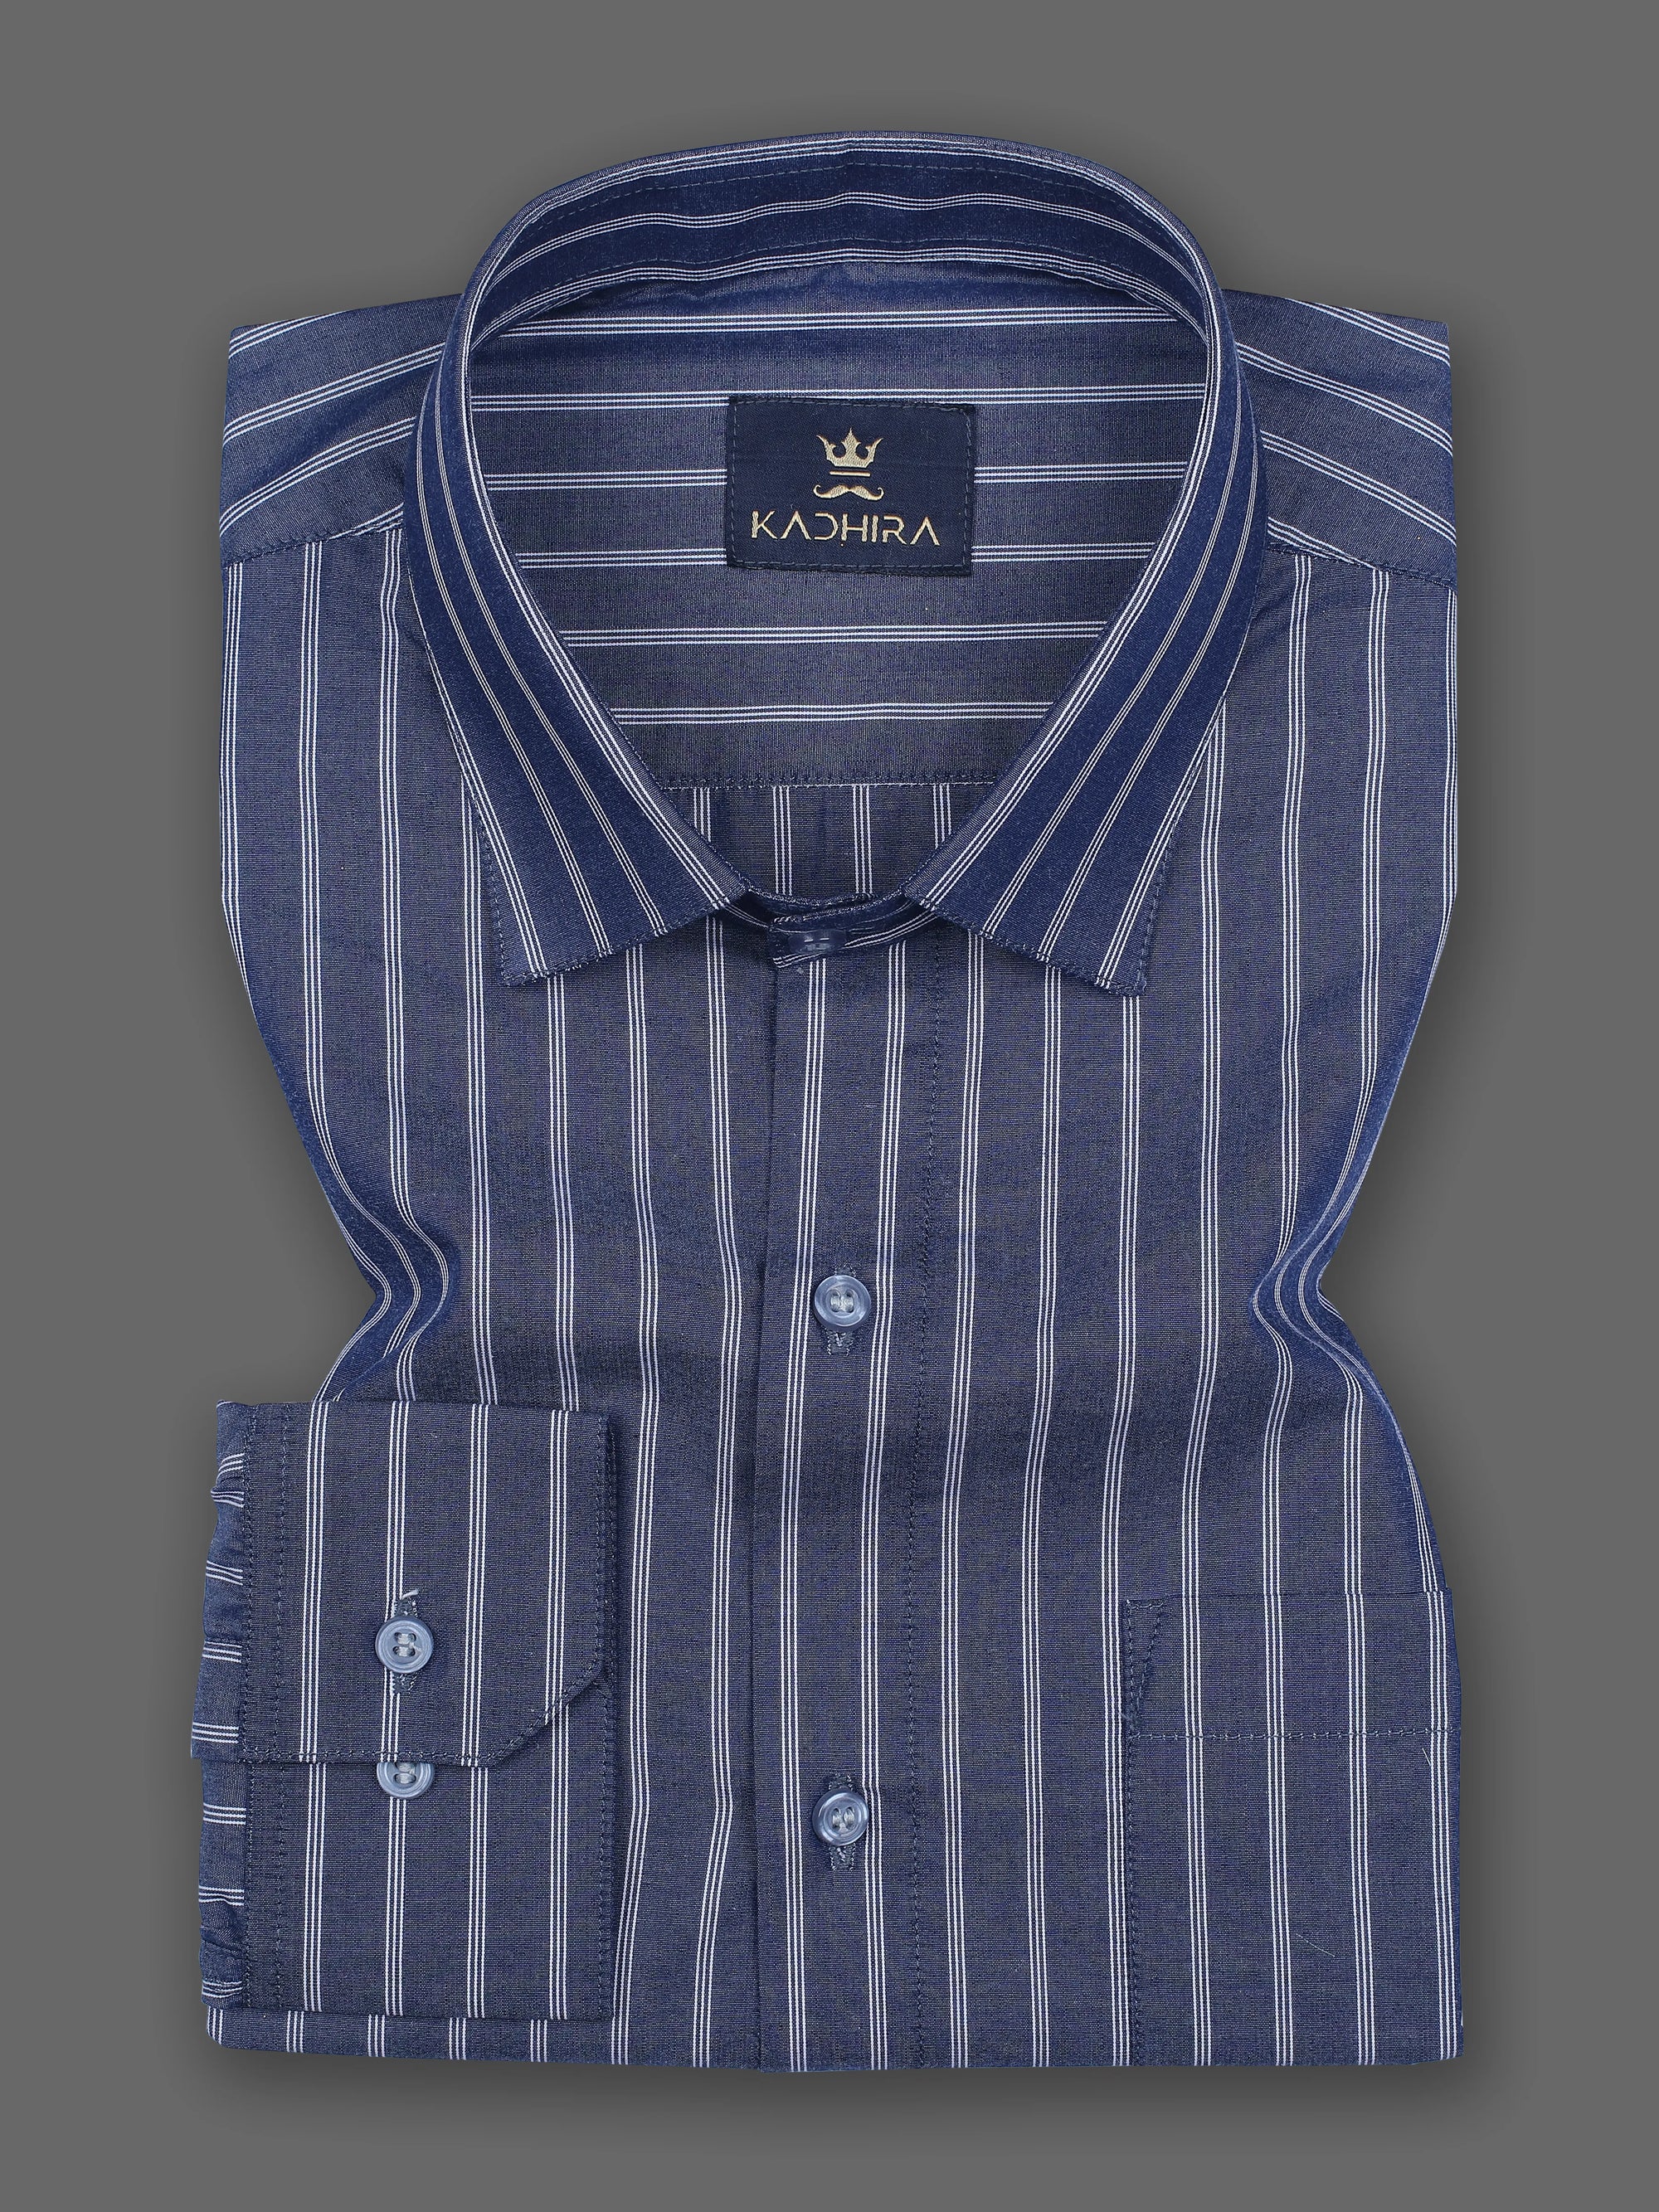 Oxford Blue With White Striped Super Premium Cotton Shirt-[ON SALE]